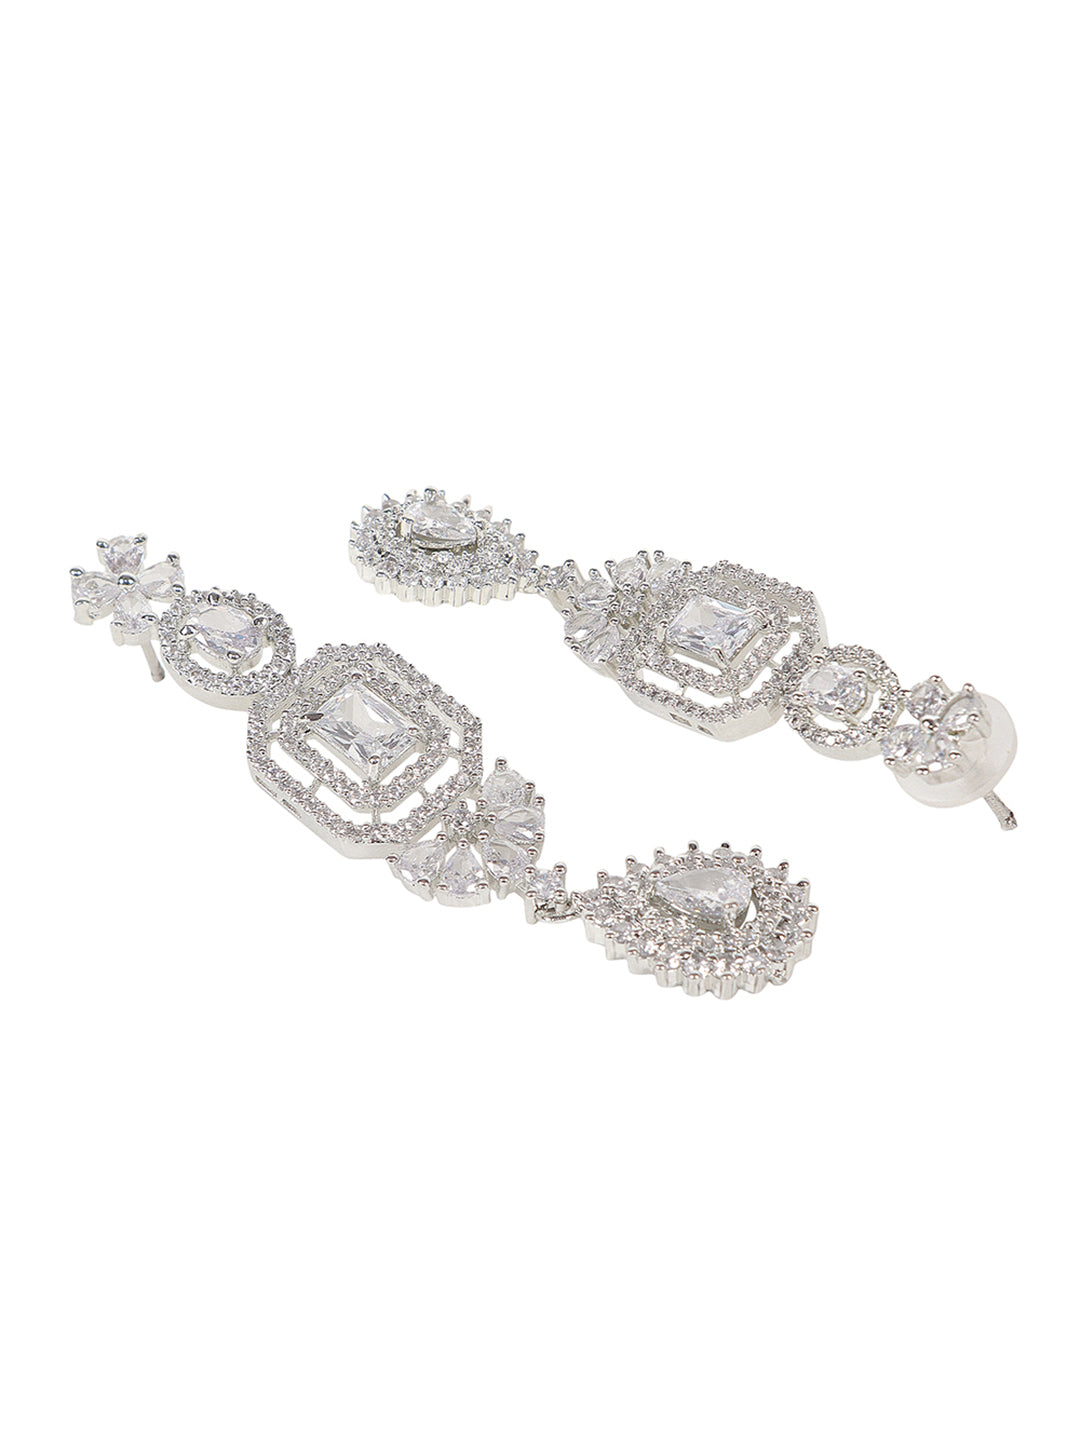 Elegant Rhodium Plated White American Diamond Necklace Set For Women